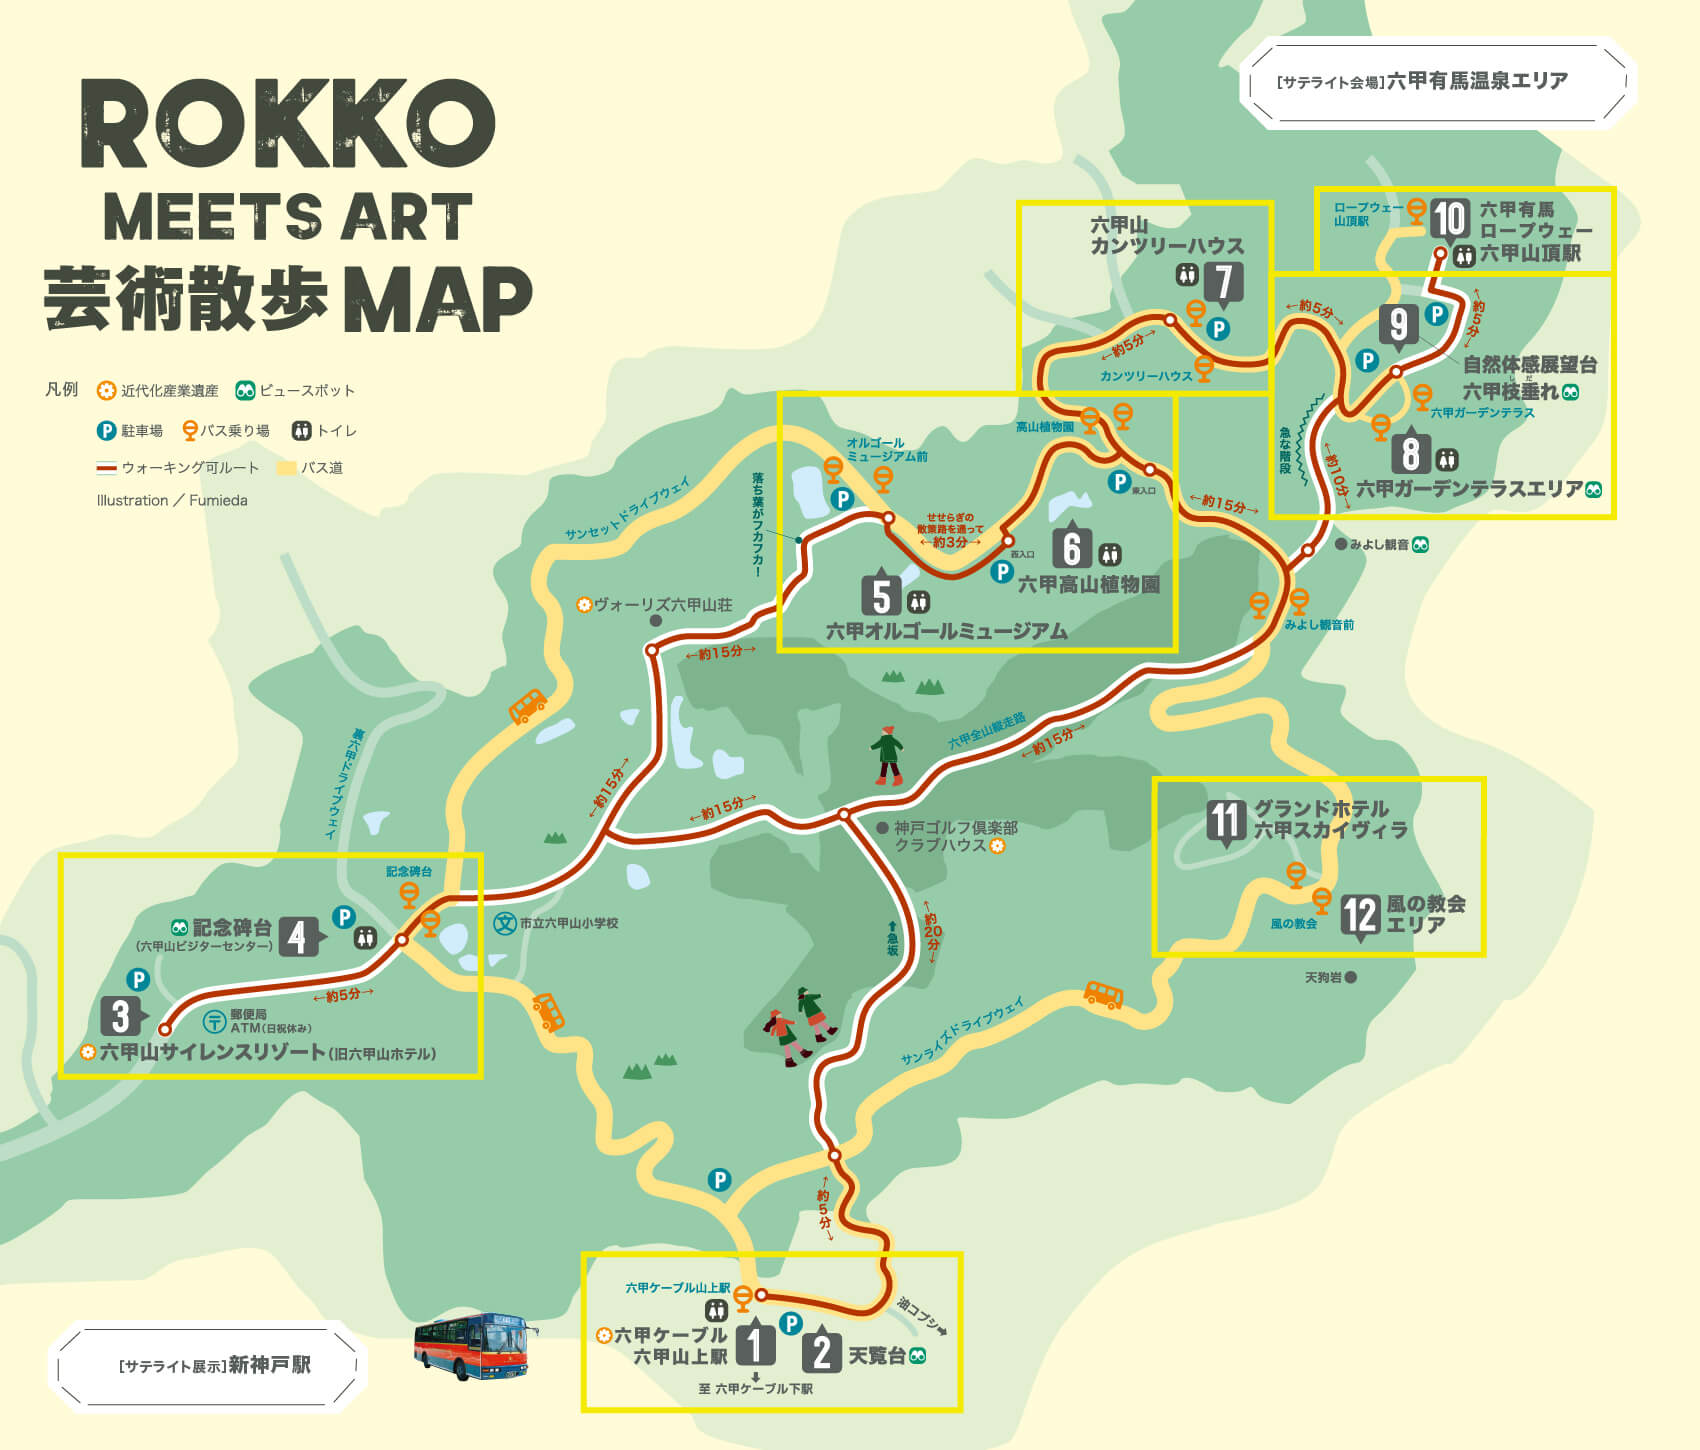 ROKKO MEETS ART 芸術散歩MAP